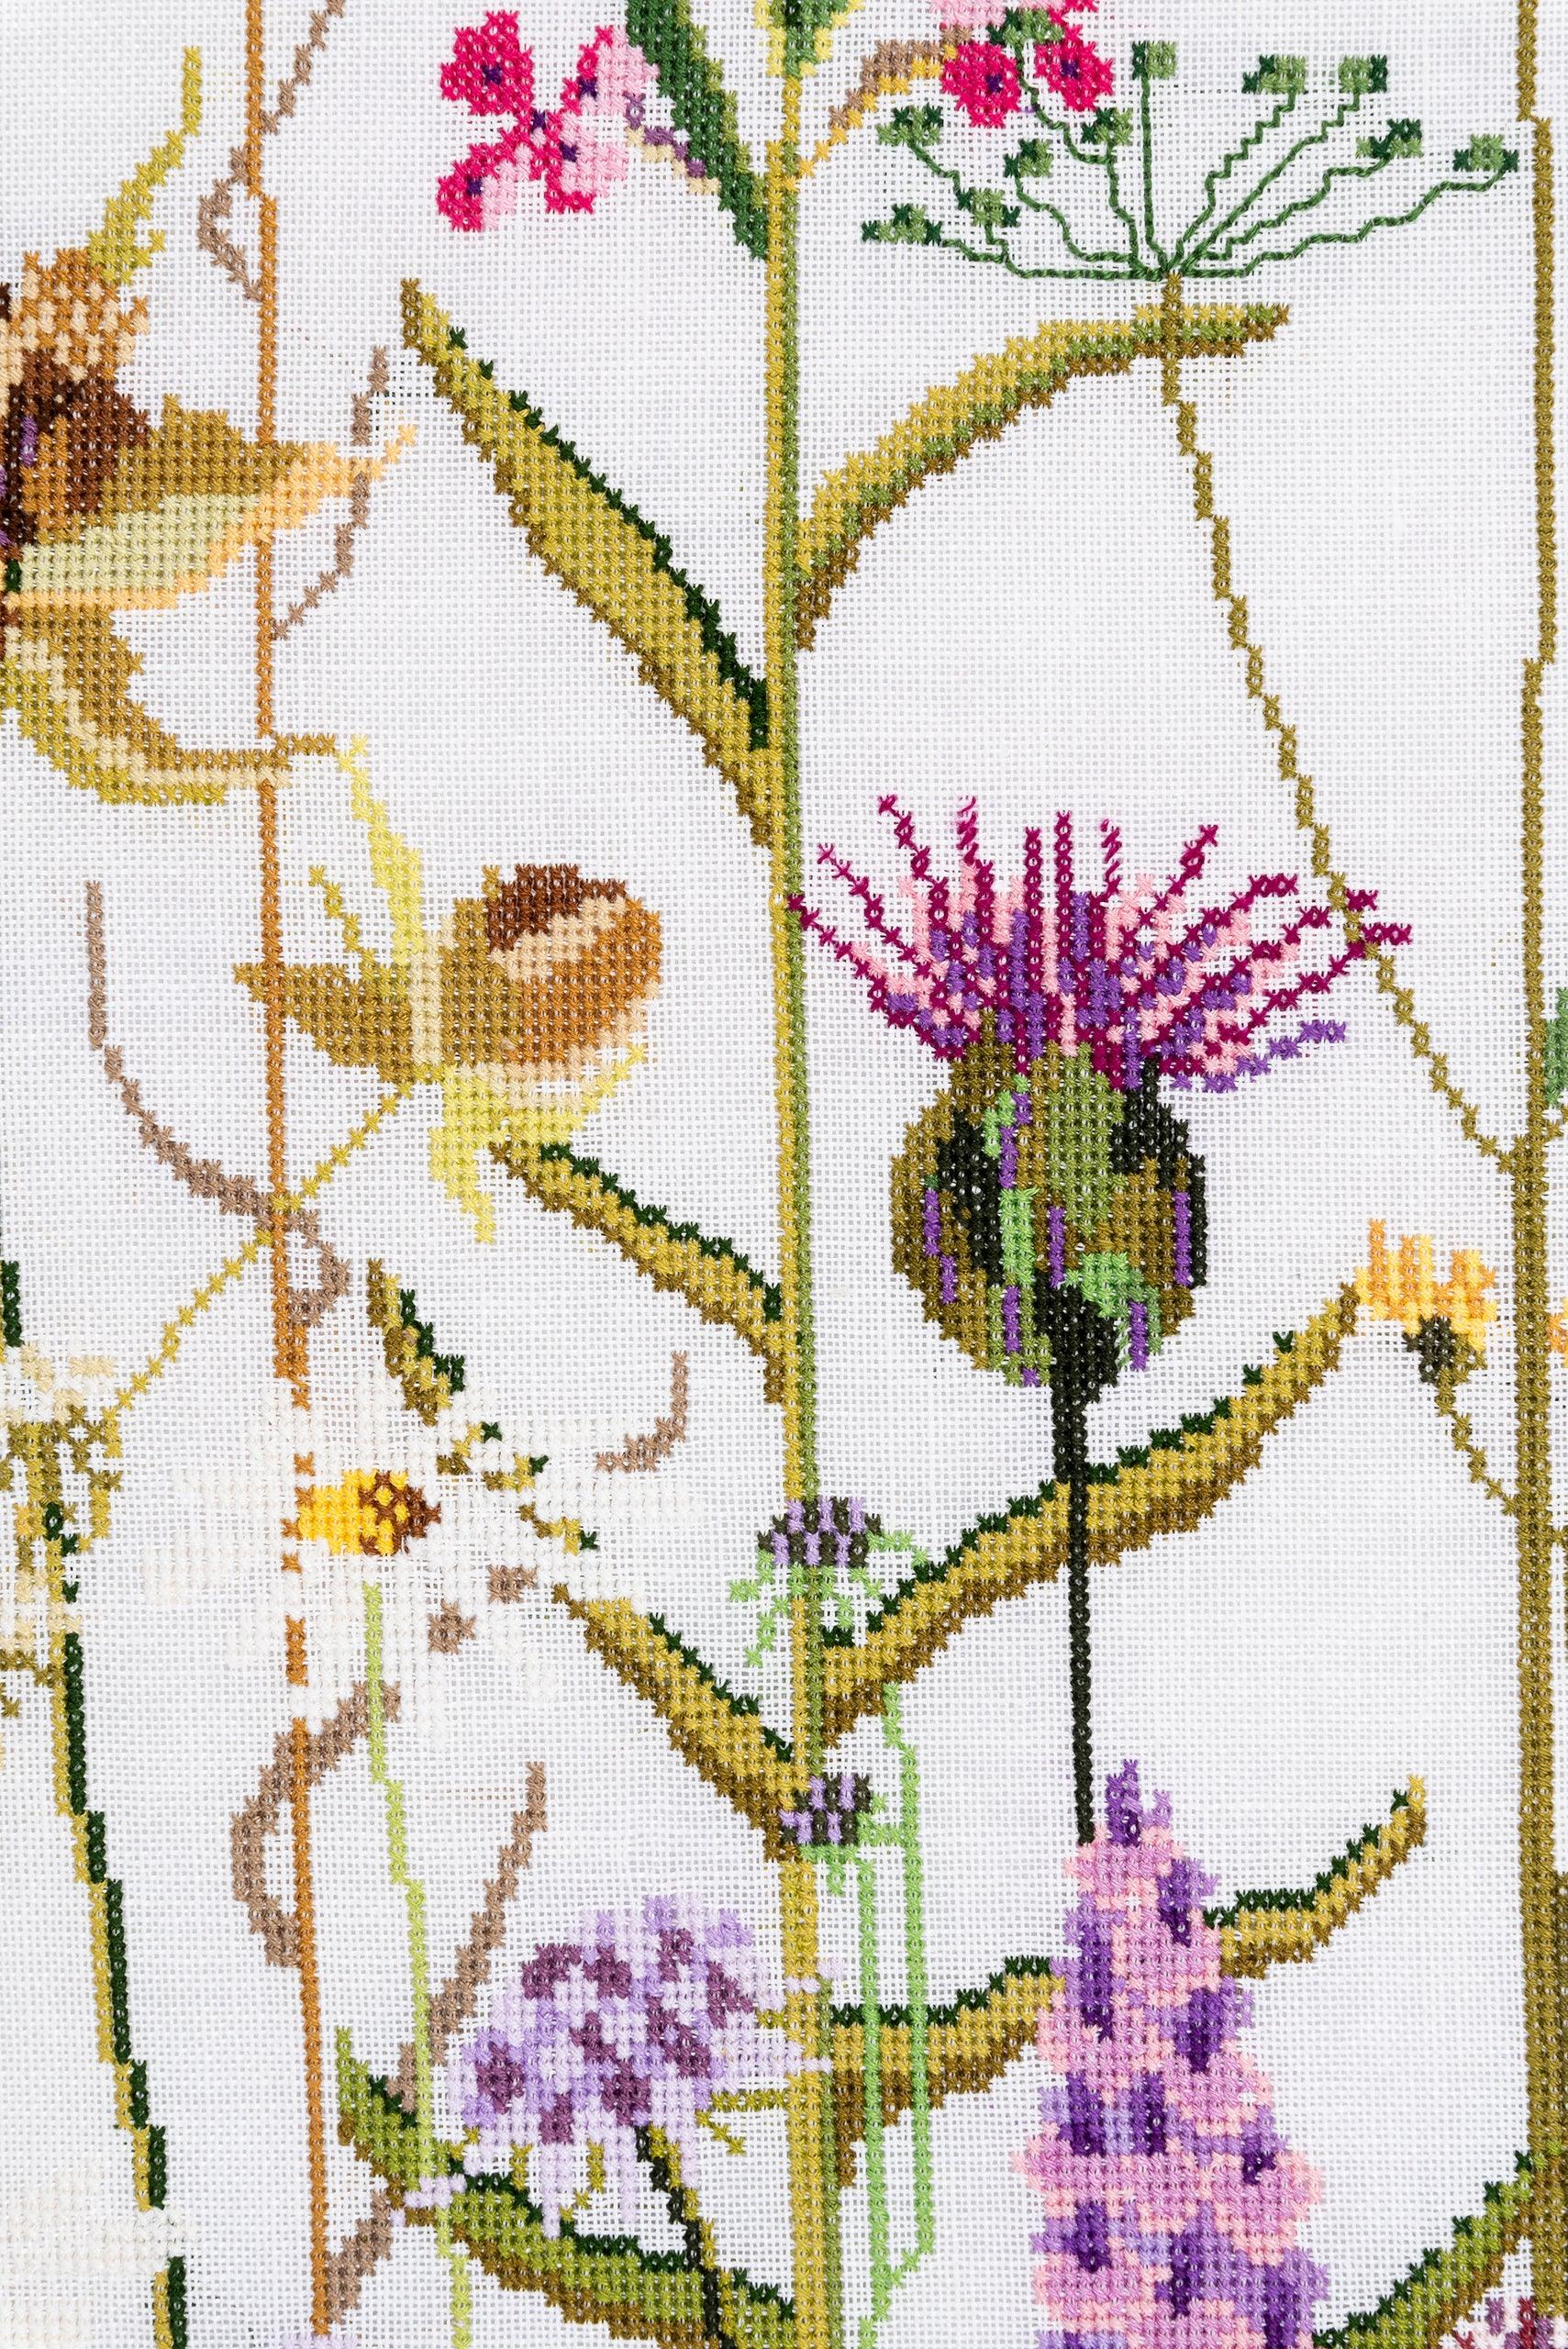 Thea Gouverneur - Counted Cross Stitch Kit - Wild Flowers - Linen - 32 count - 821 - Thea Gouverneur Since 1959